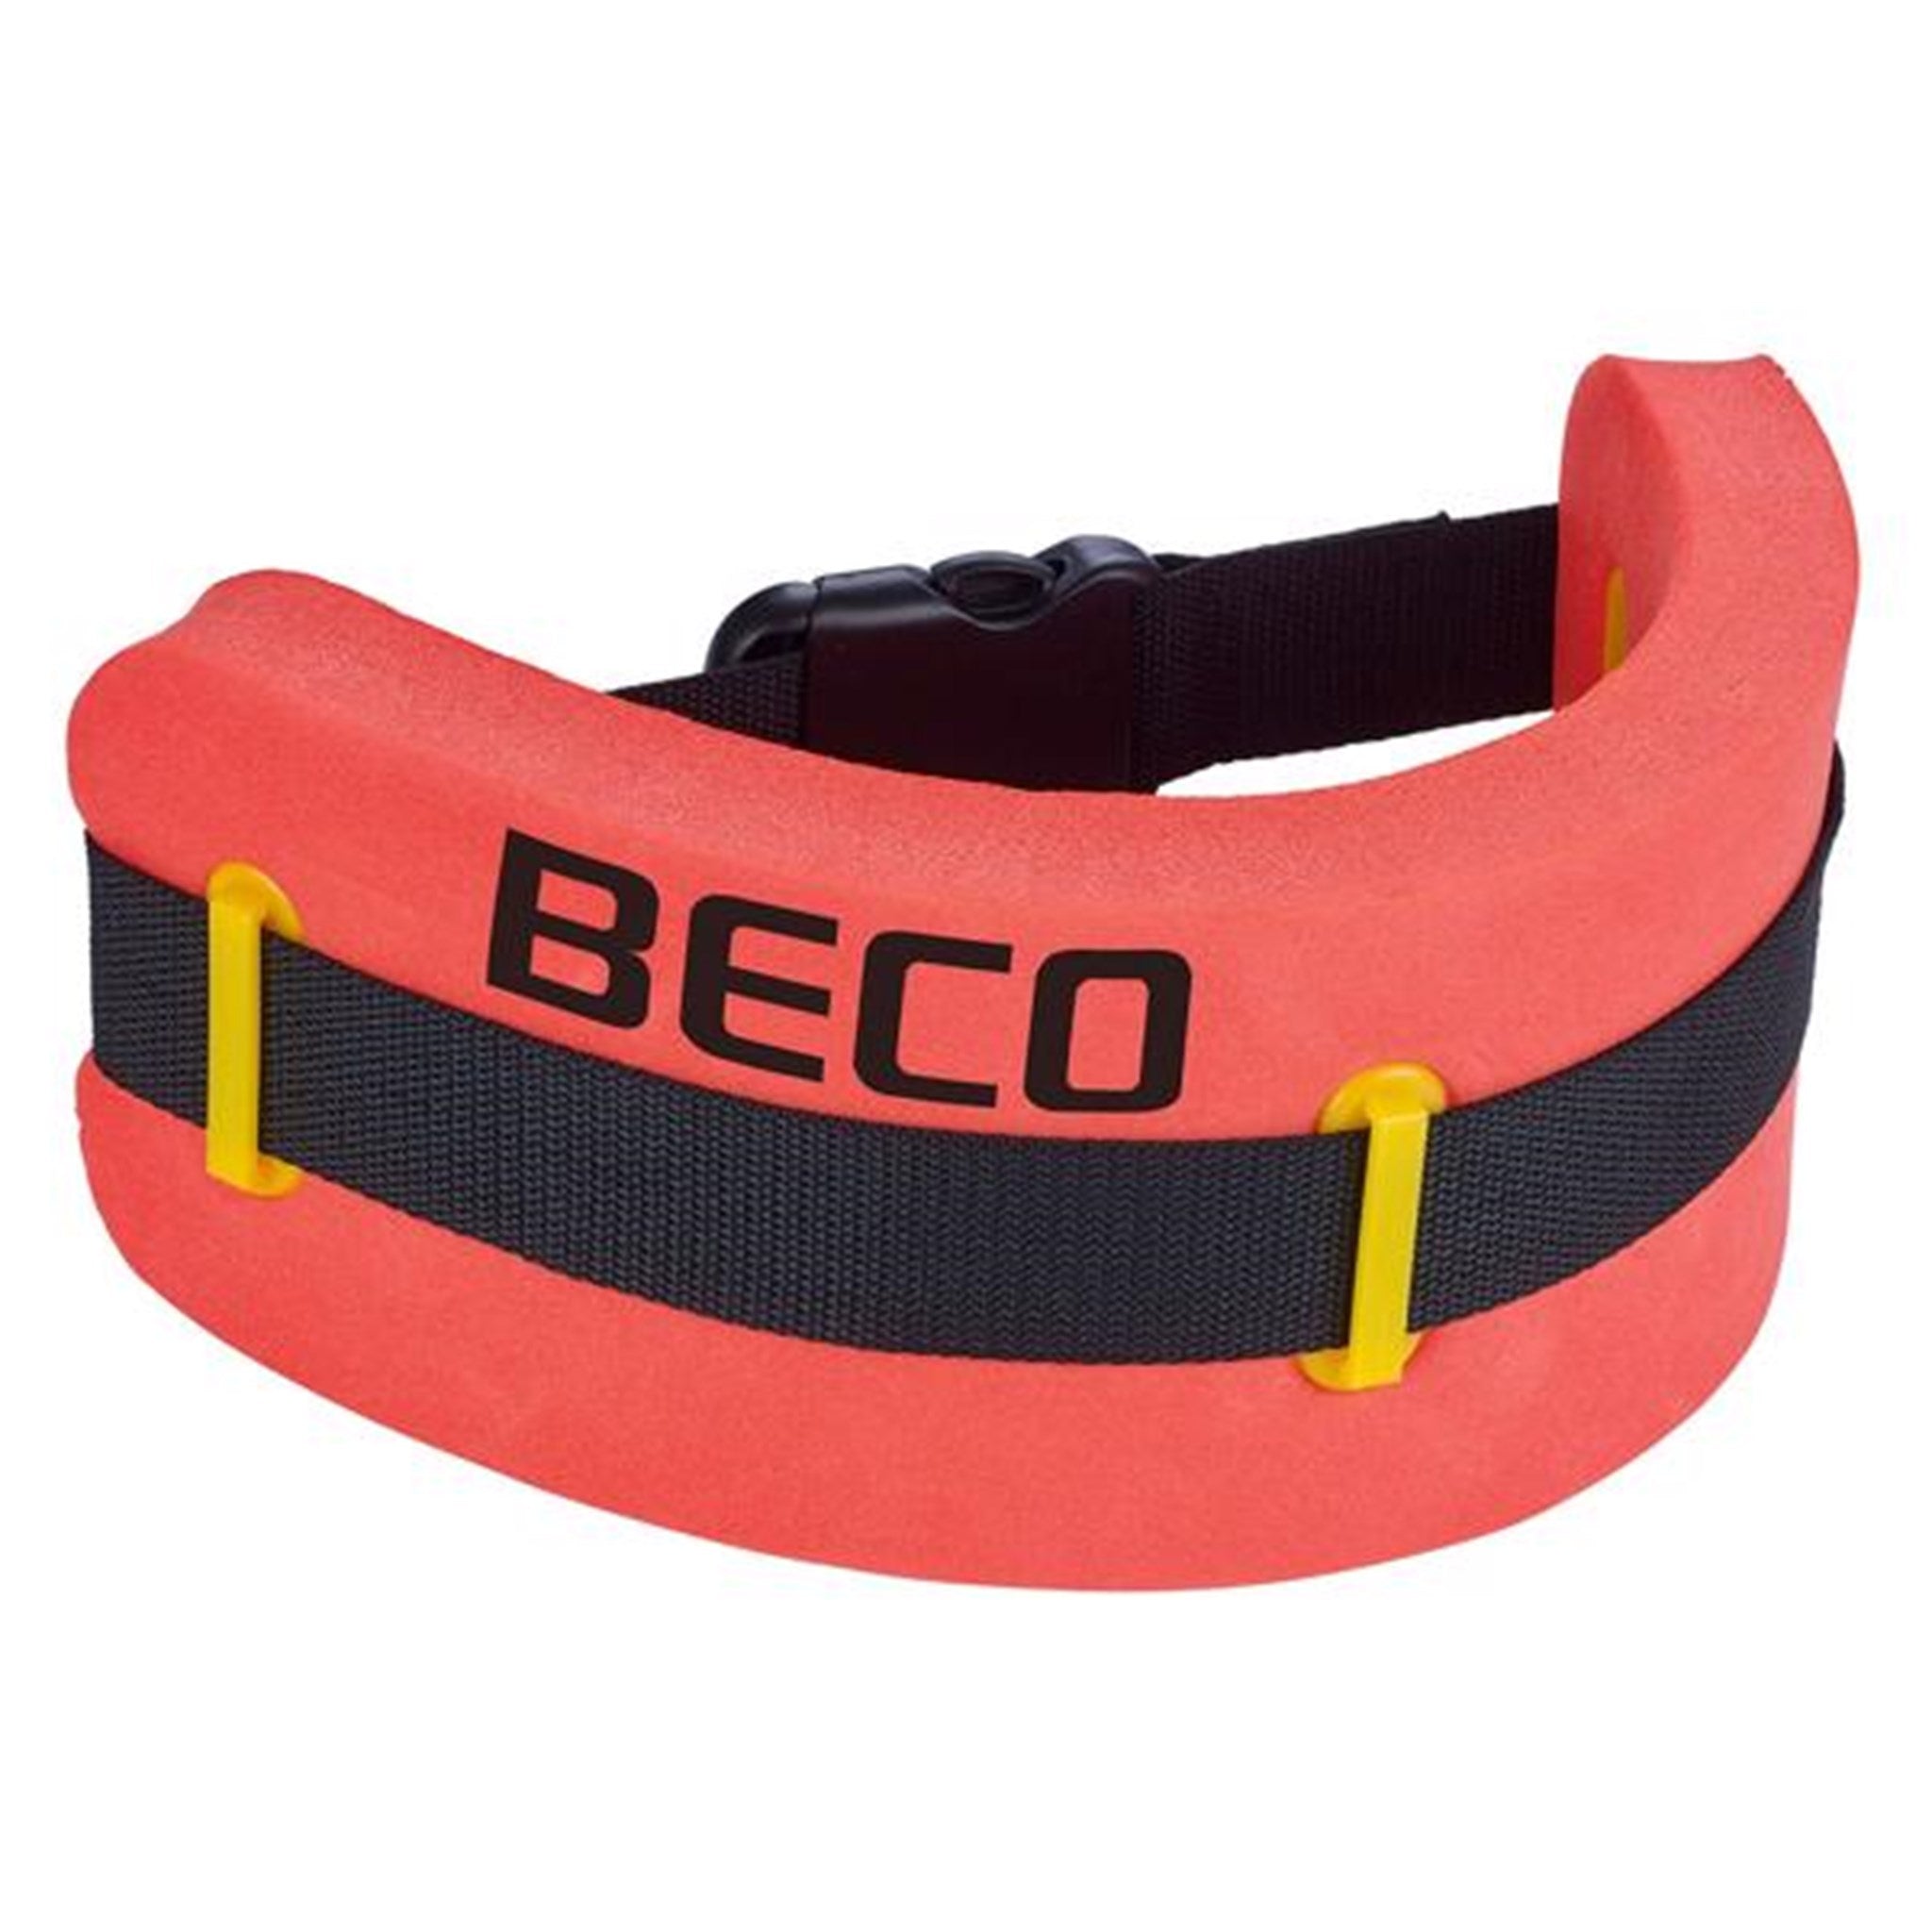 BECO Sealife Swim Belt Small Red